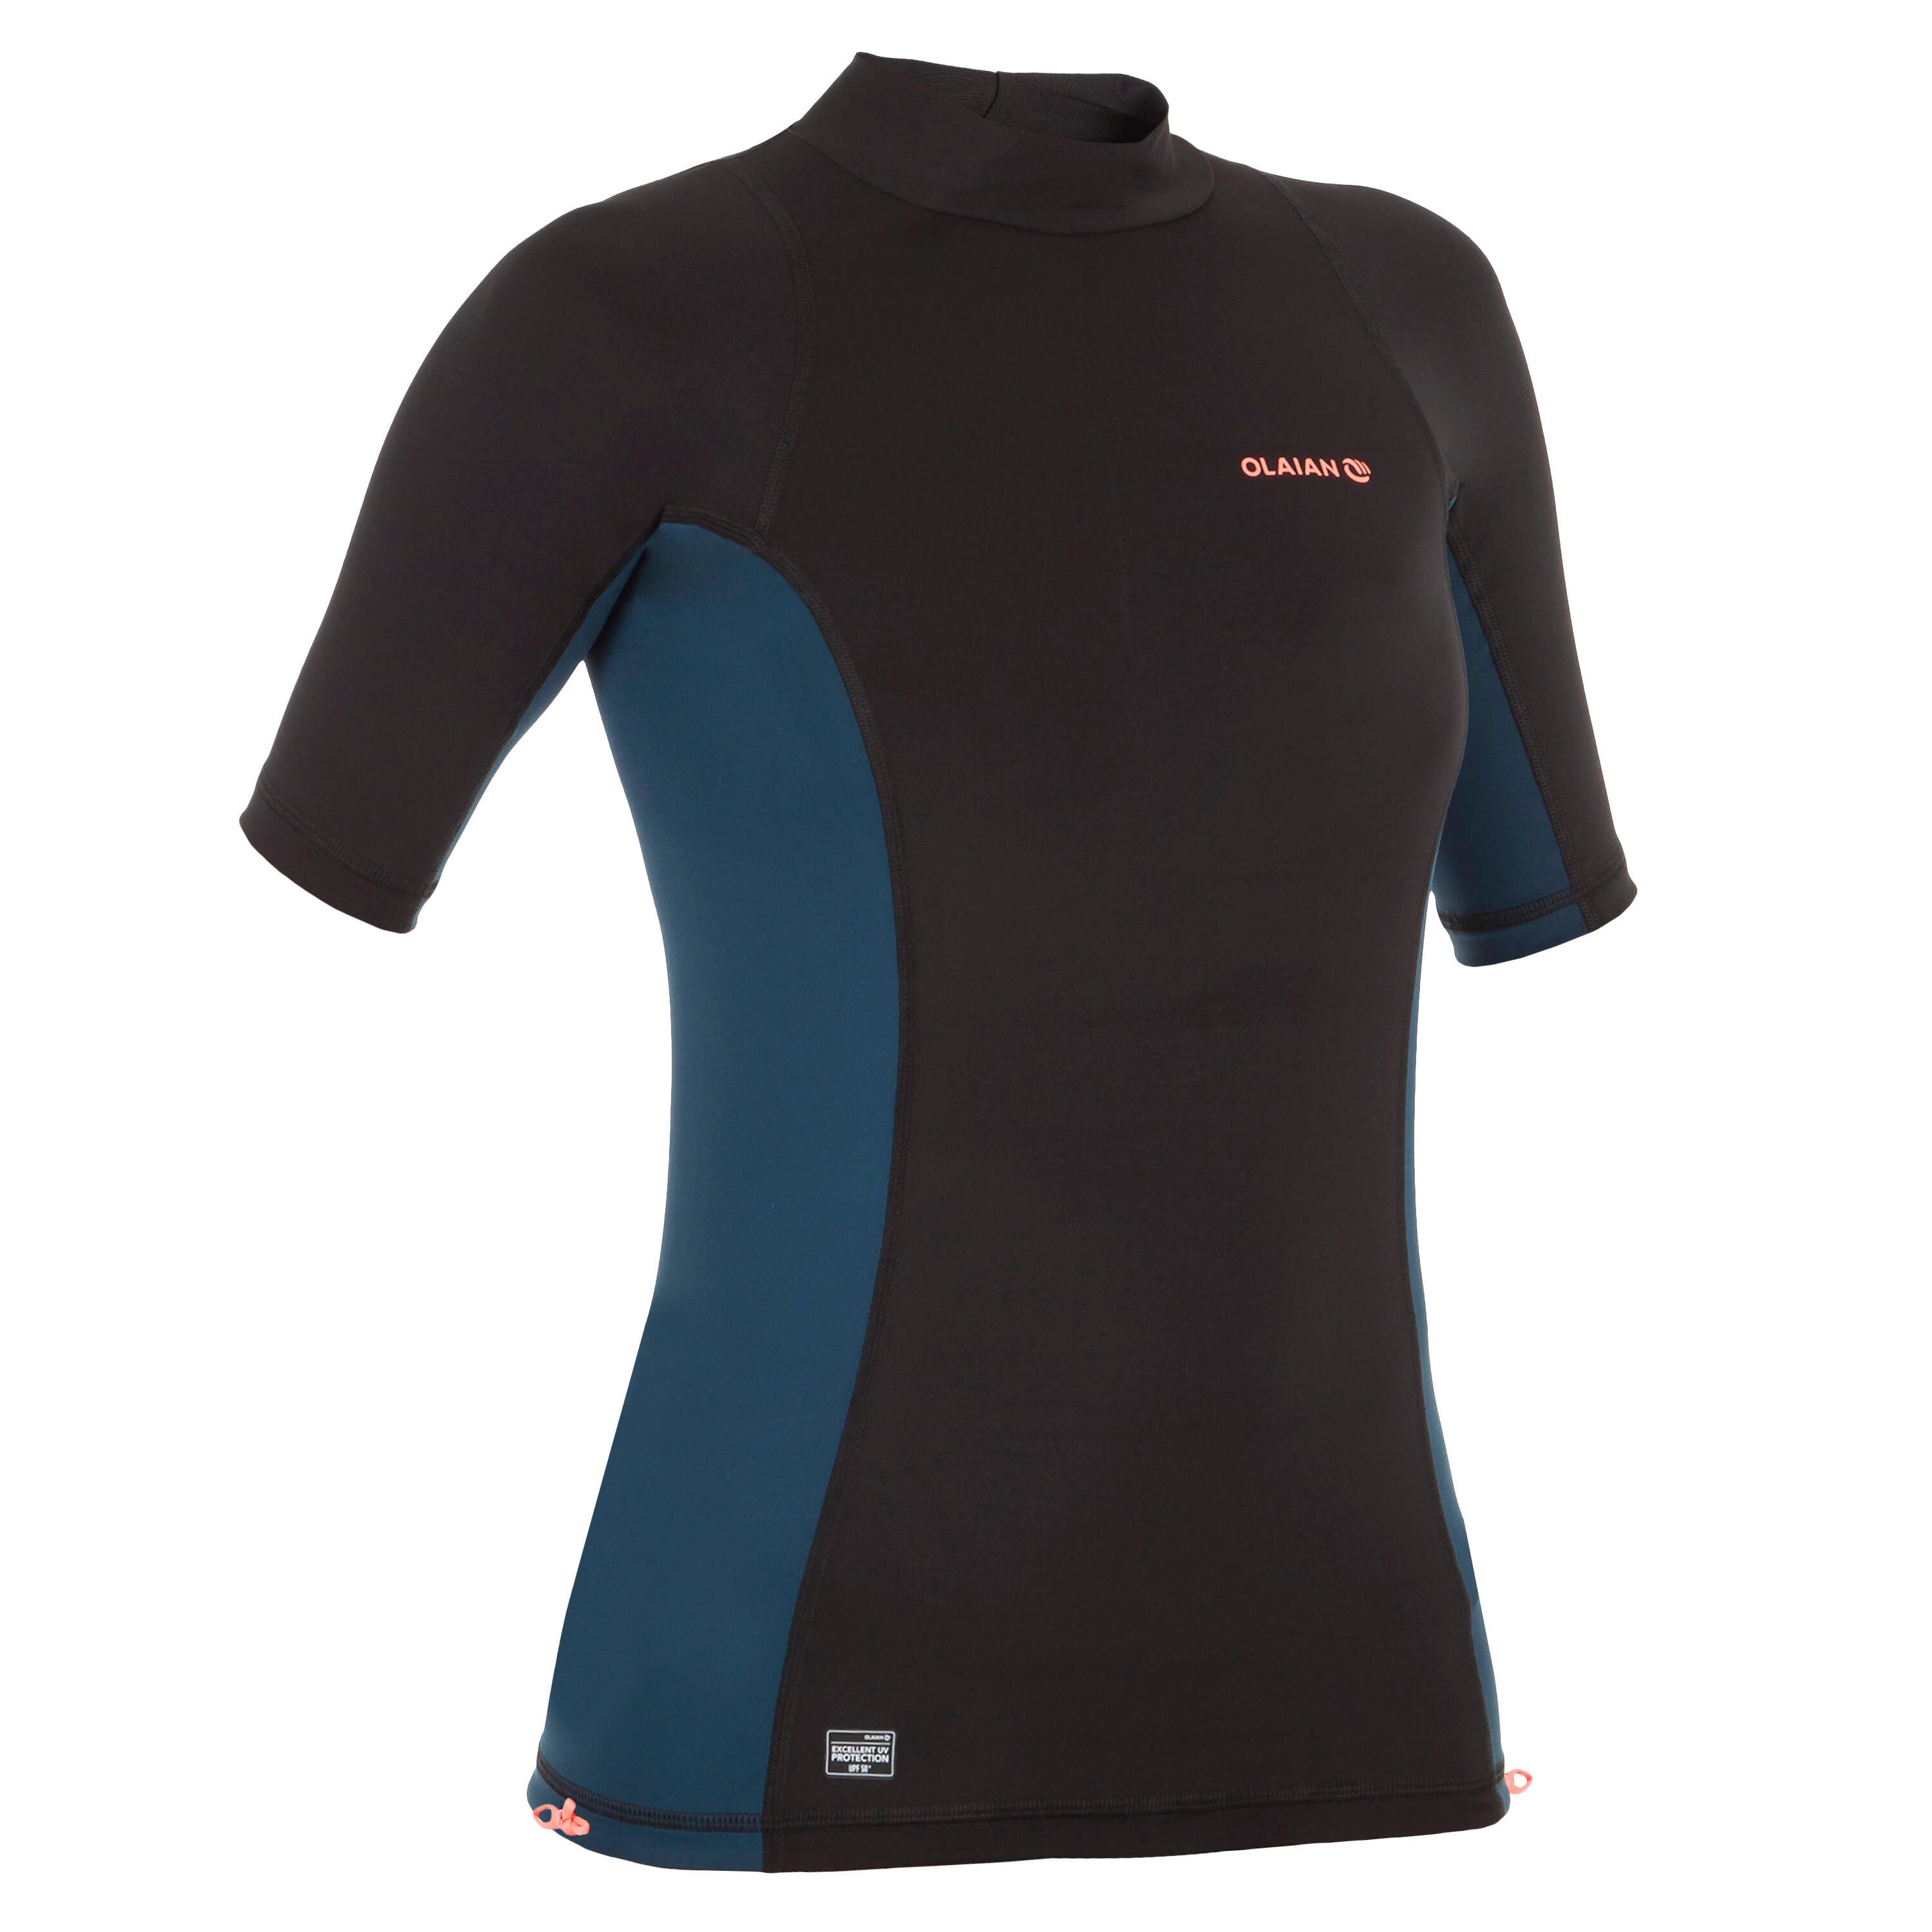 OLAIAN Women's Short Sleeve UV Protection Surfing Top T-Shirt 500 black bicolour